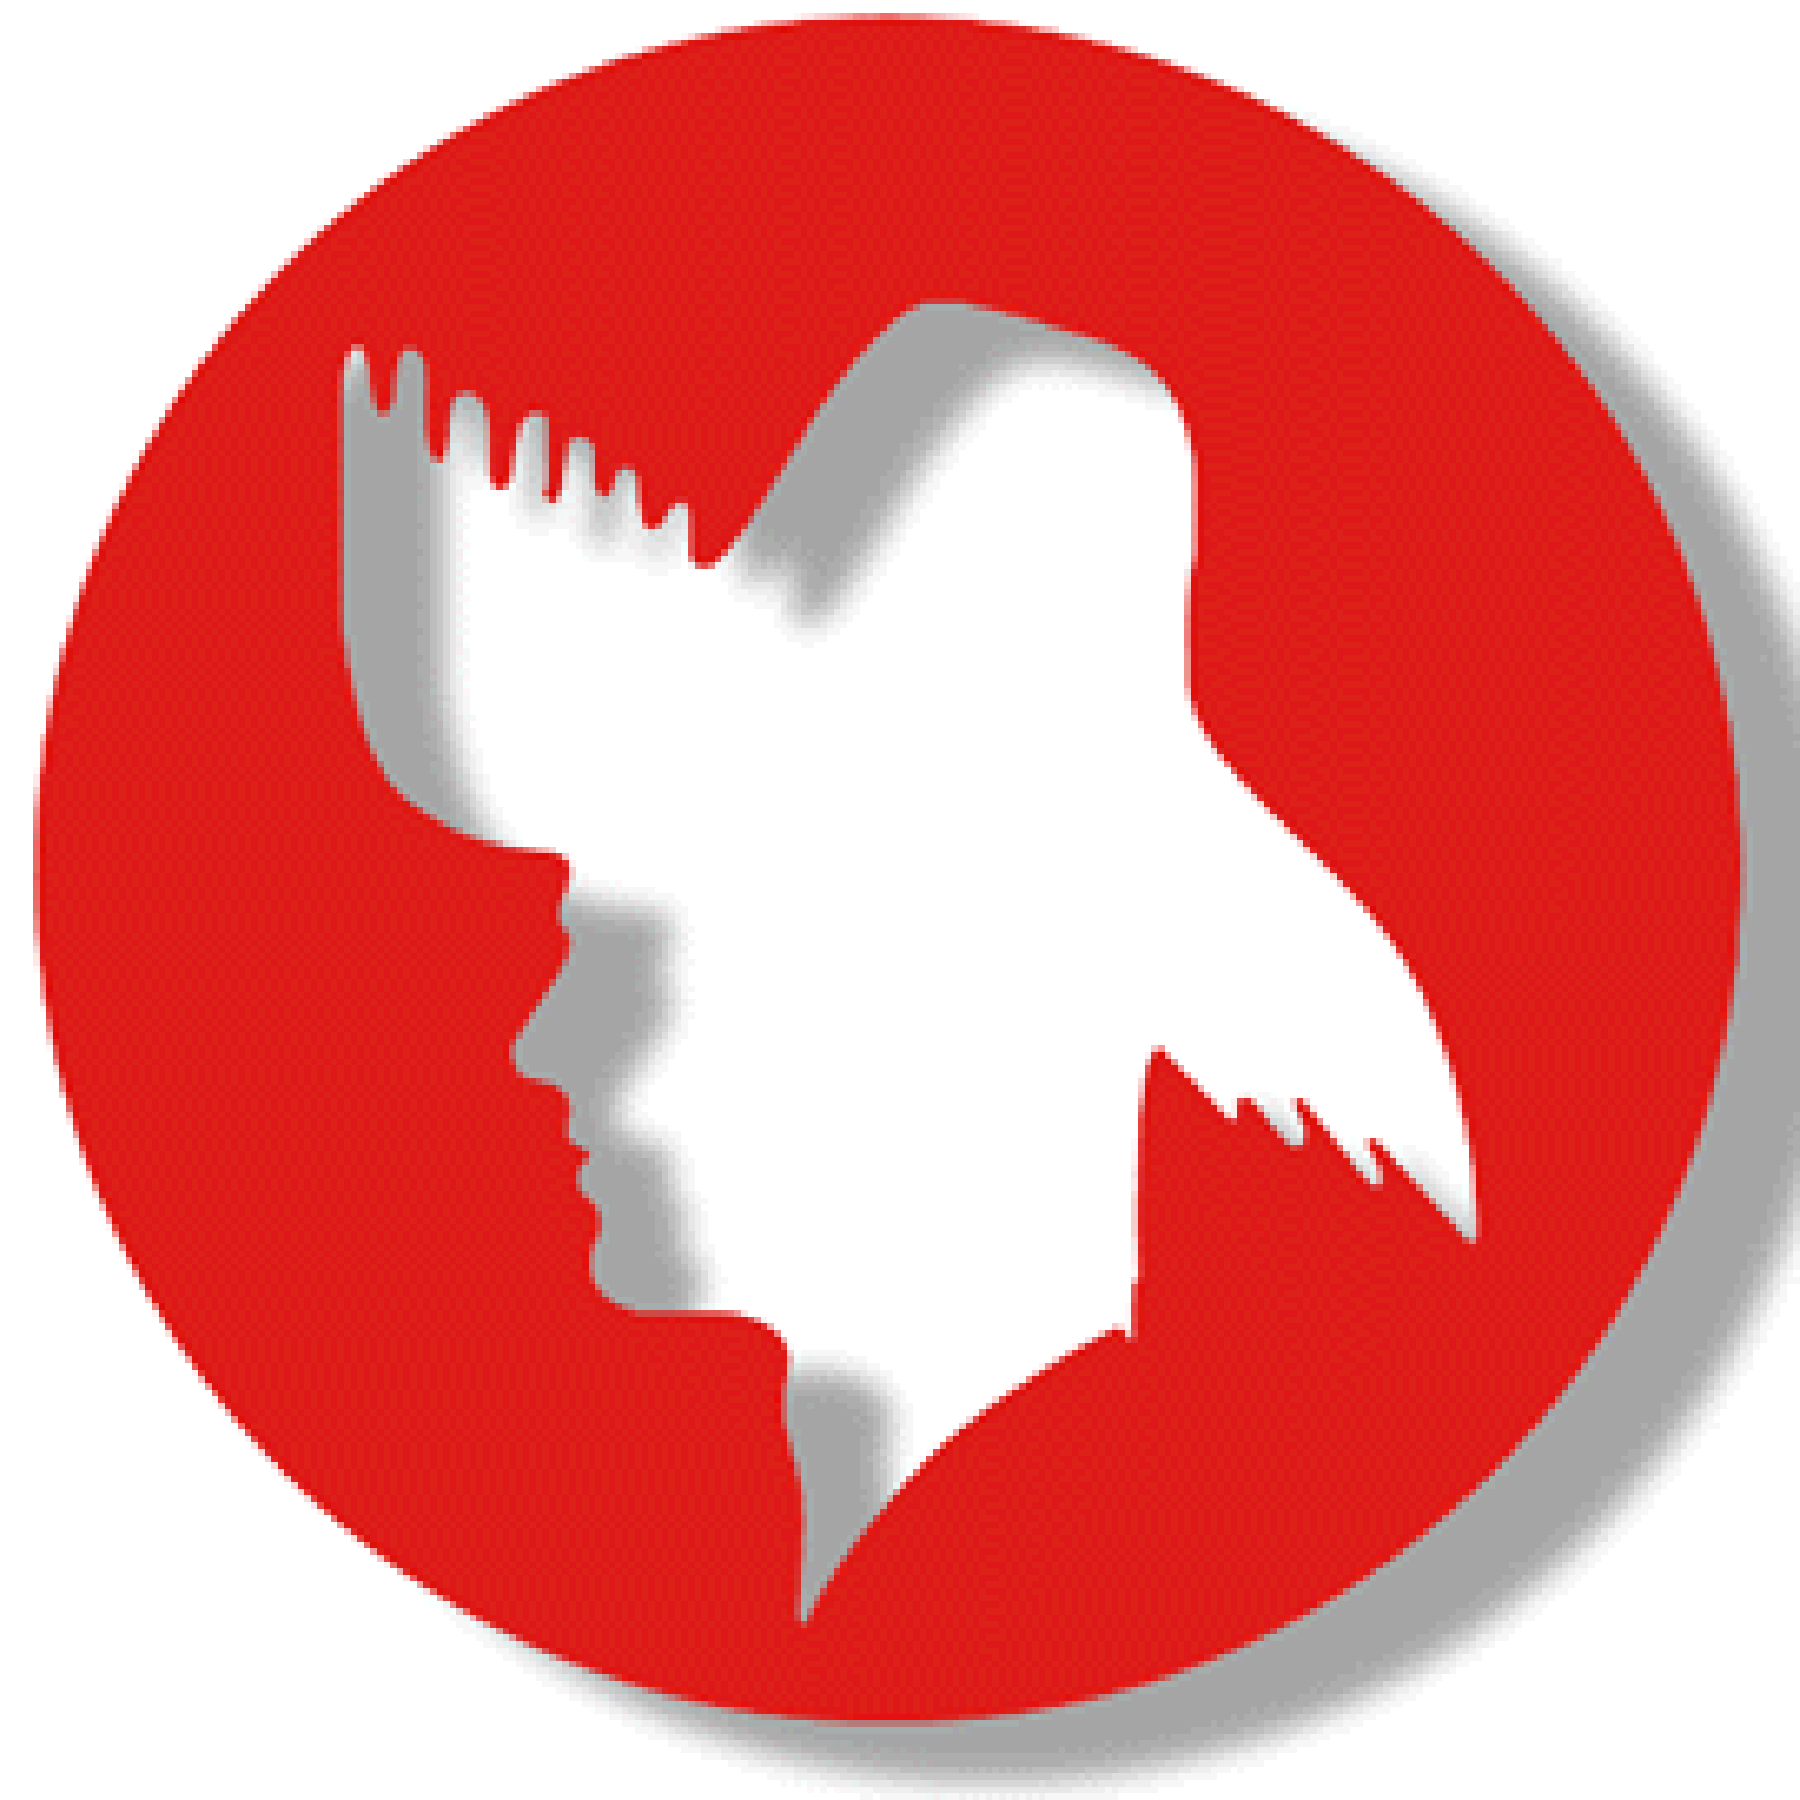 PPD Logo - PPD logo | LA CHULETA CONGELÁ'